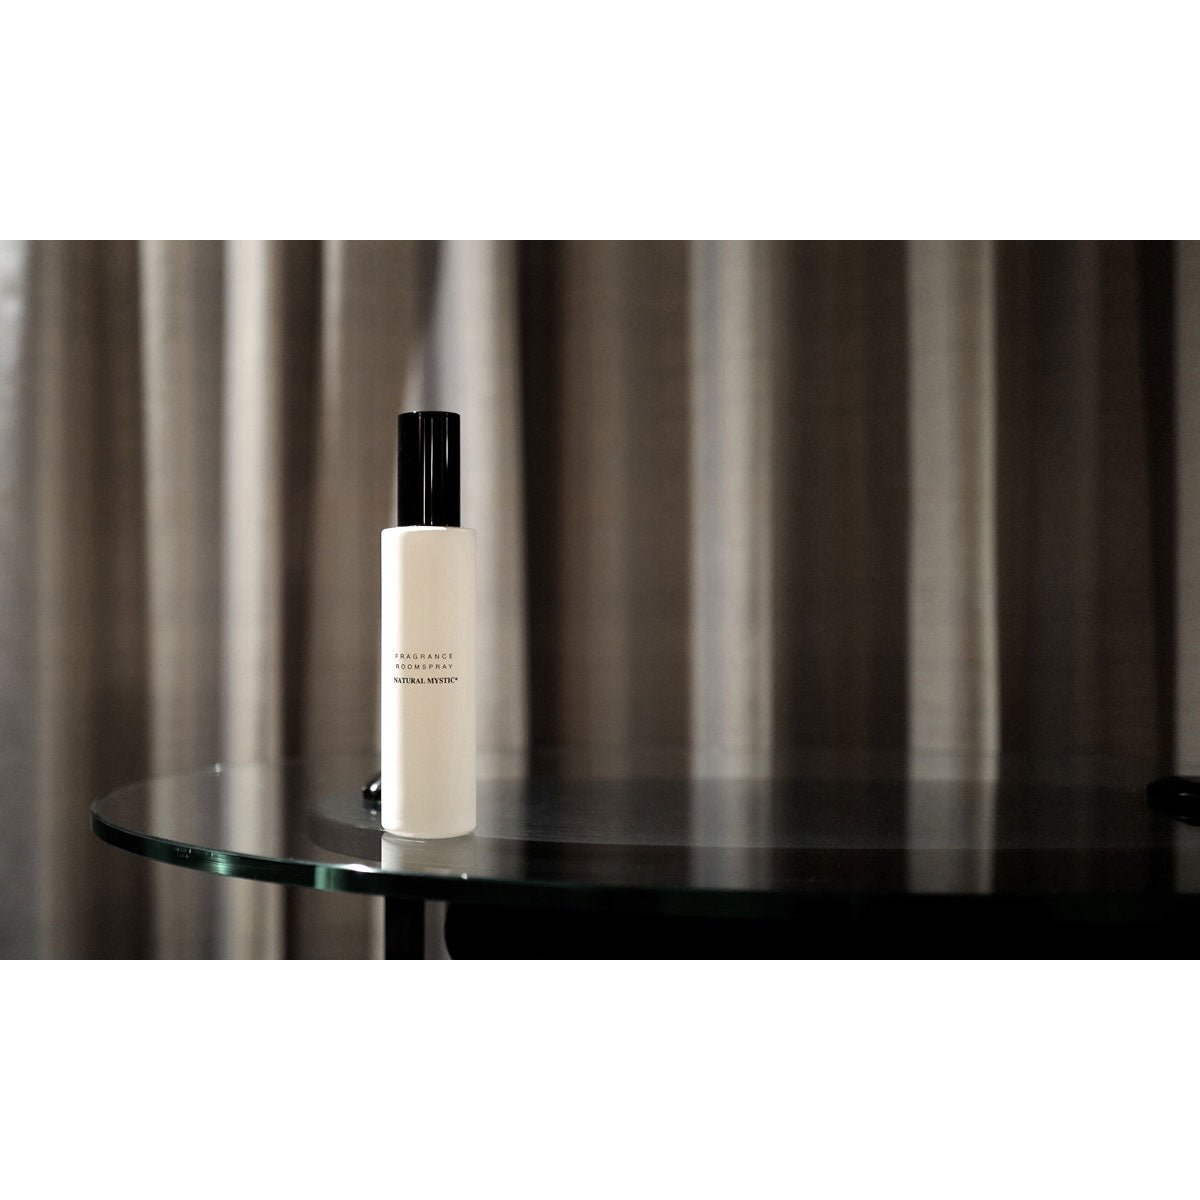 retaW Fragrance Room Spray 'Natural Mystic' 100ml  - Allike Store